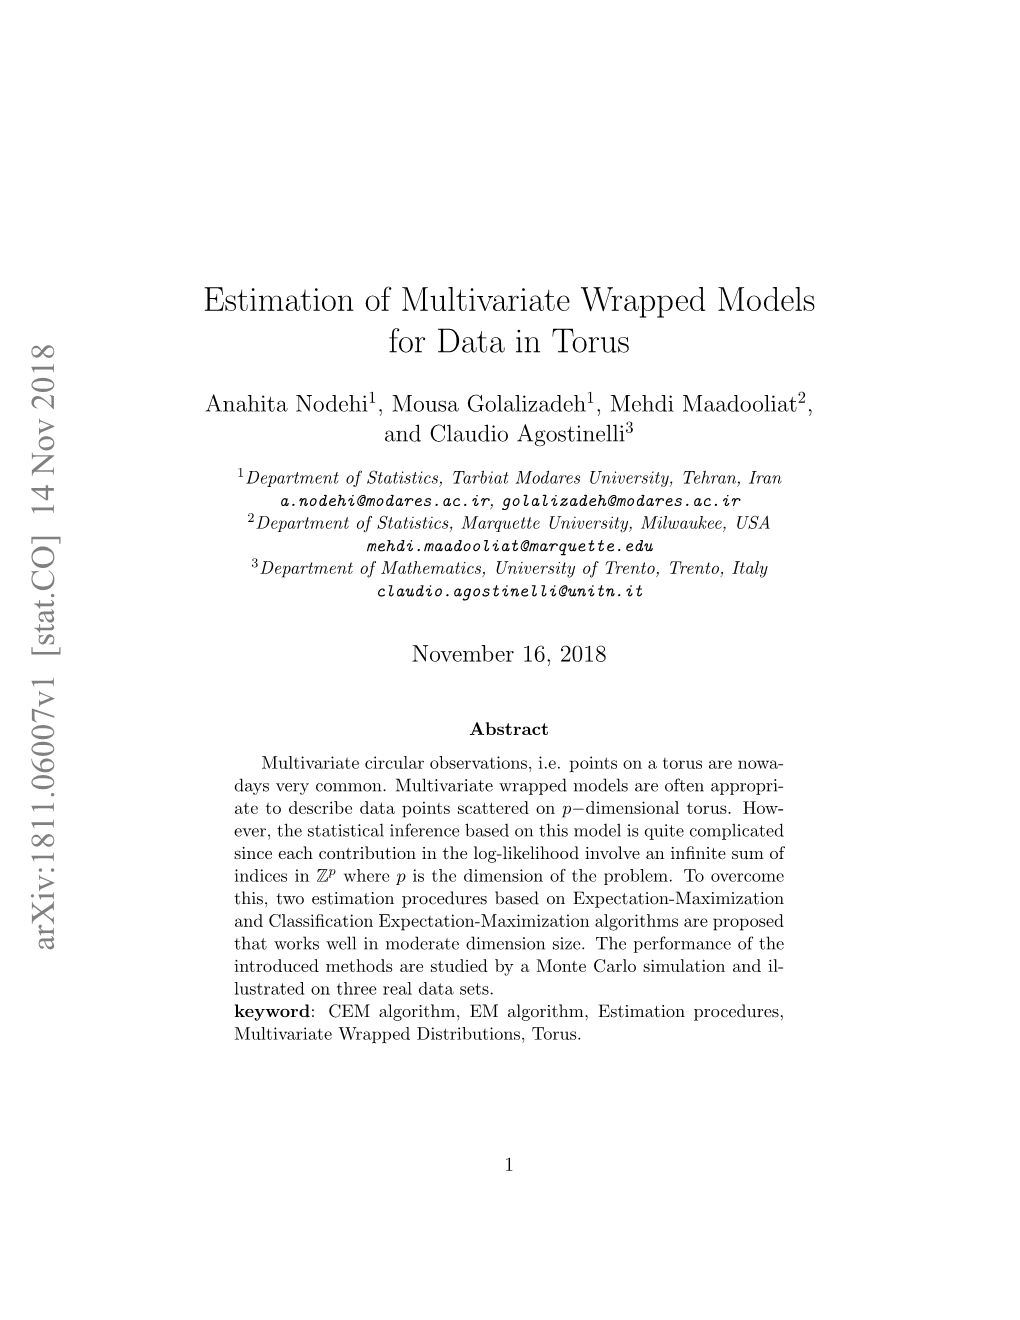 Estimation of Multivariate Wrapped Models for Data in Torus